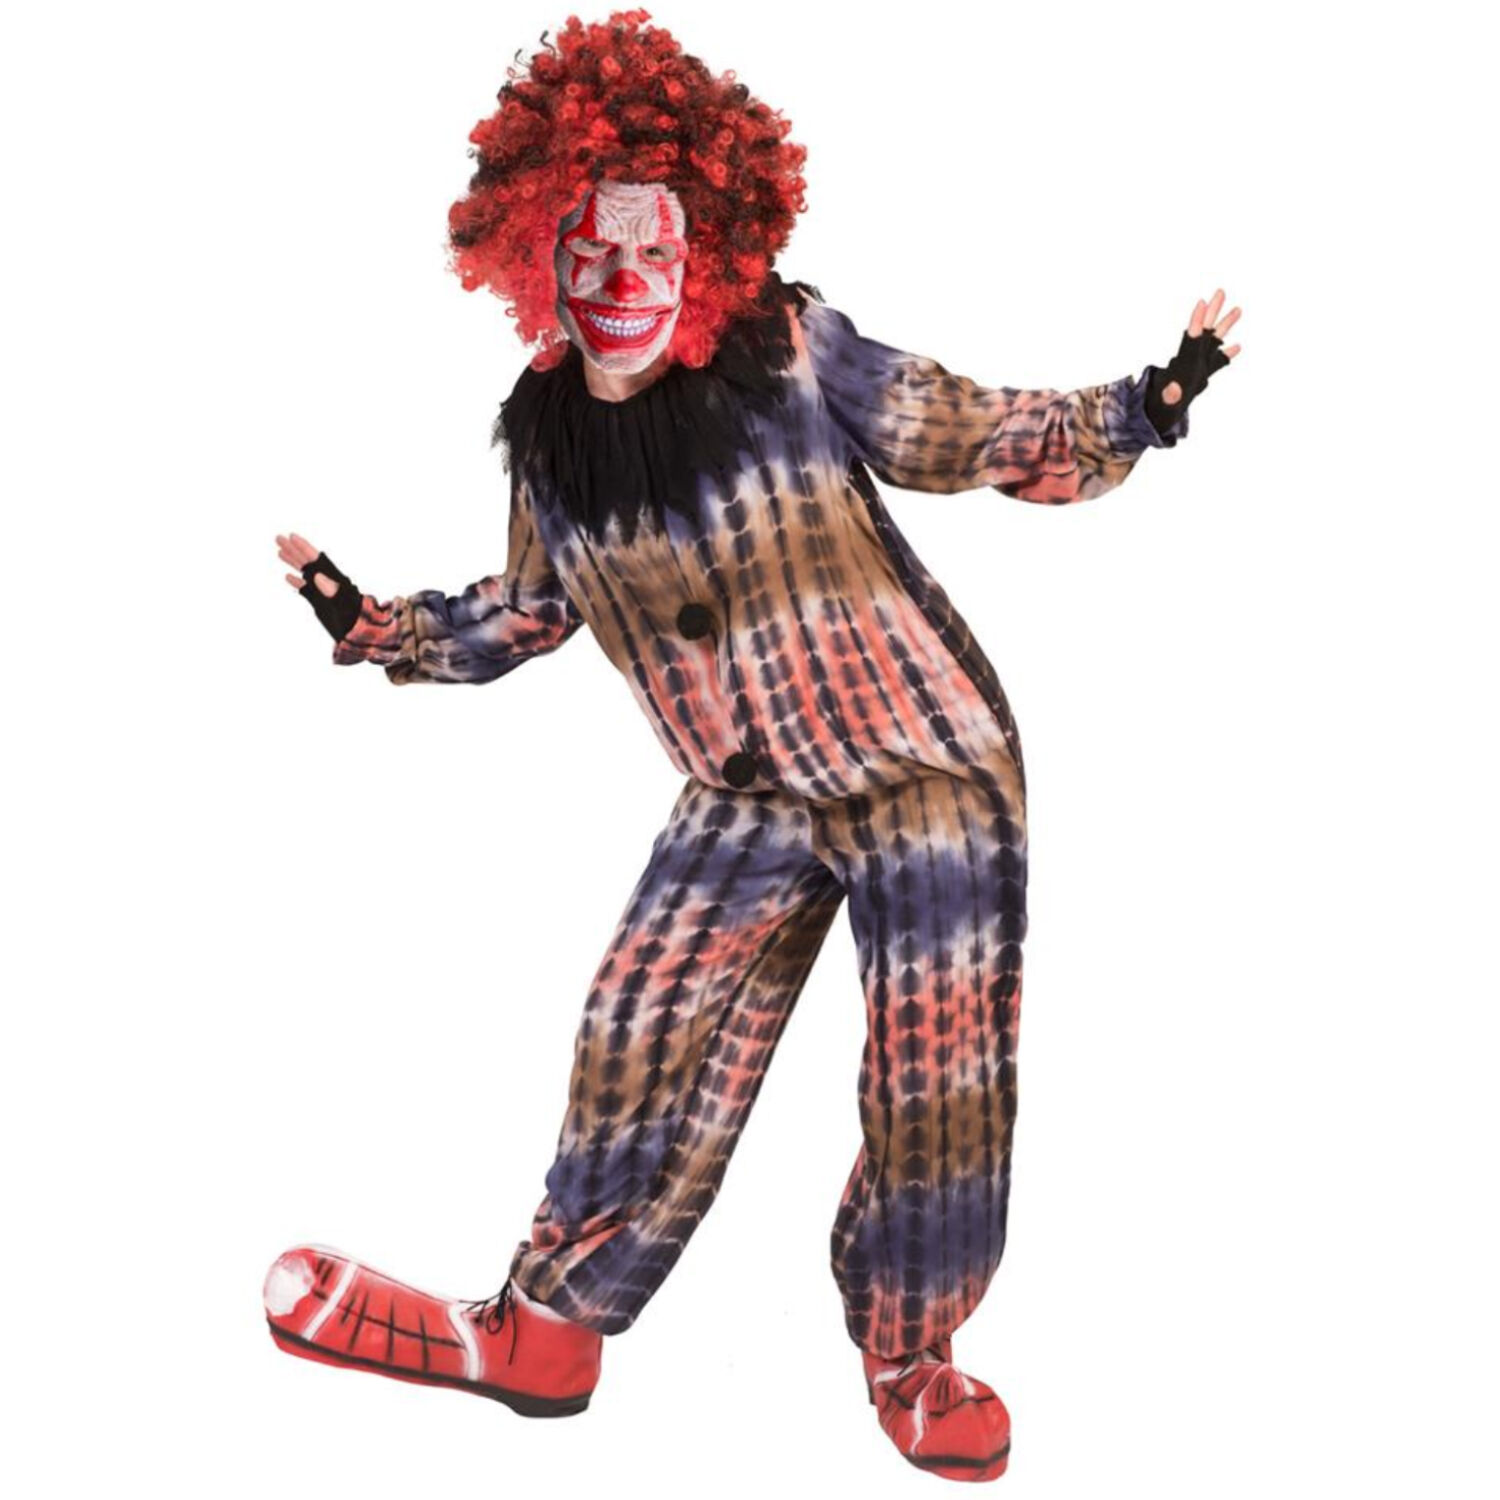 NEU Kinder-Kostüm Horror-Clown Pepe, Jumpsuit mit Kragen, Gr. 104-116